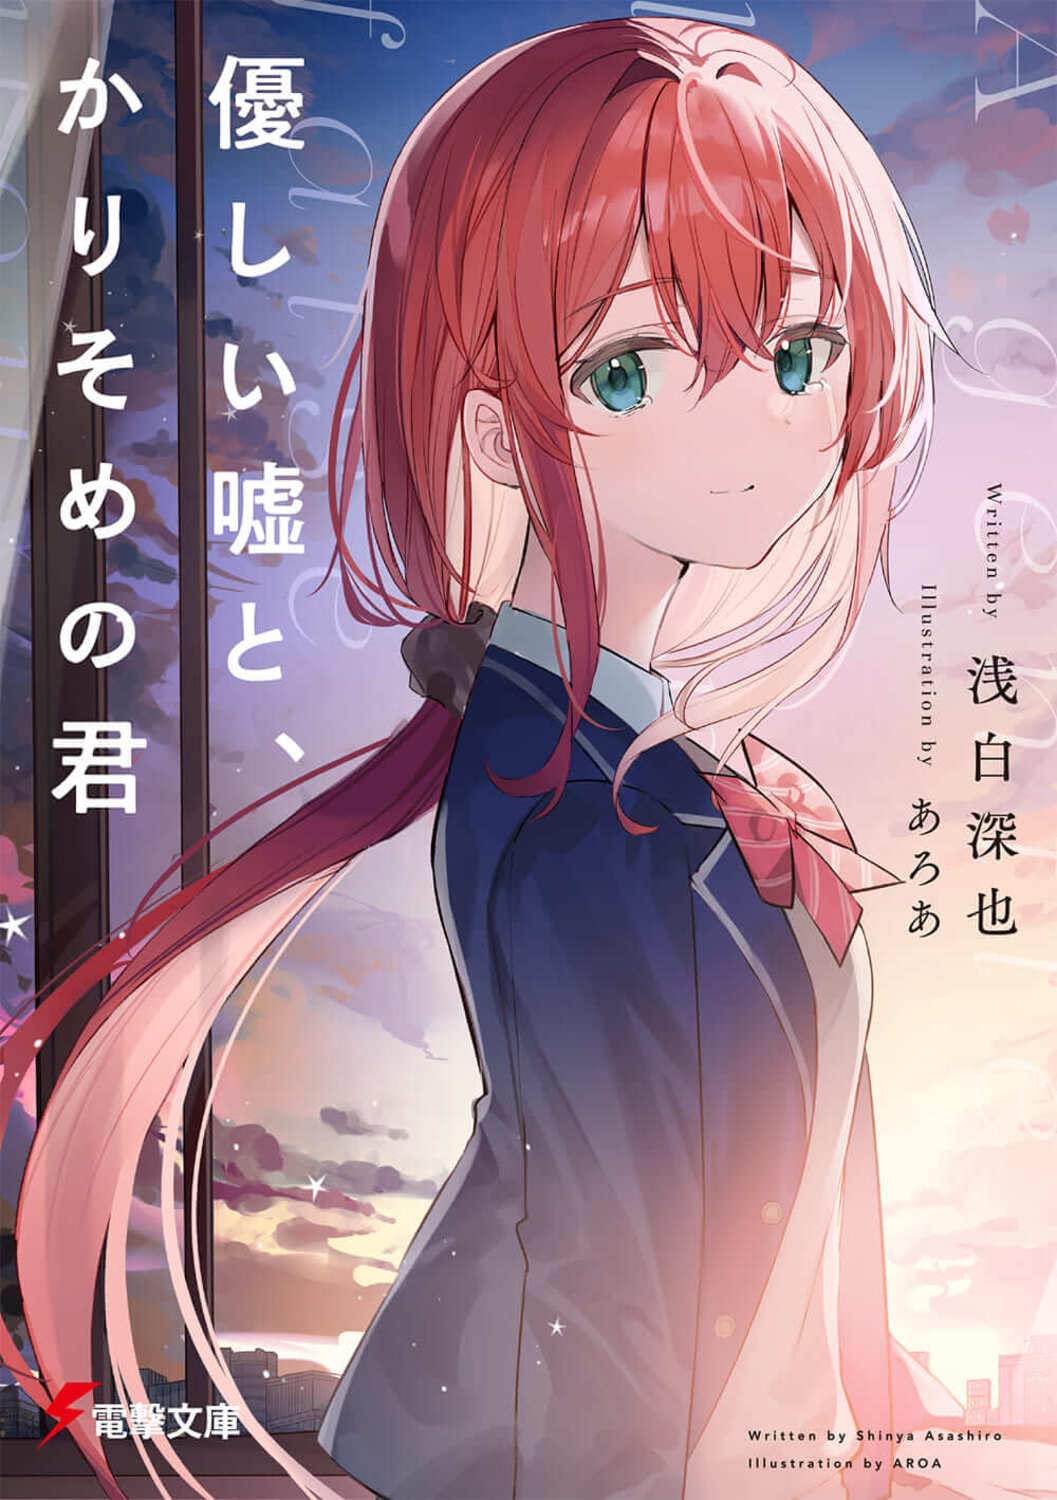 Okazu » Yuri Light Novel: Yagate Kimi ni Naru Saeki Sayaka ni Tsuite  (やがて君になる 佐伯沙弥香について)